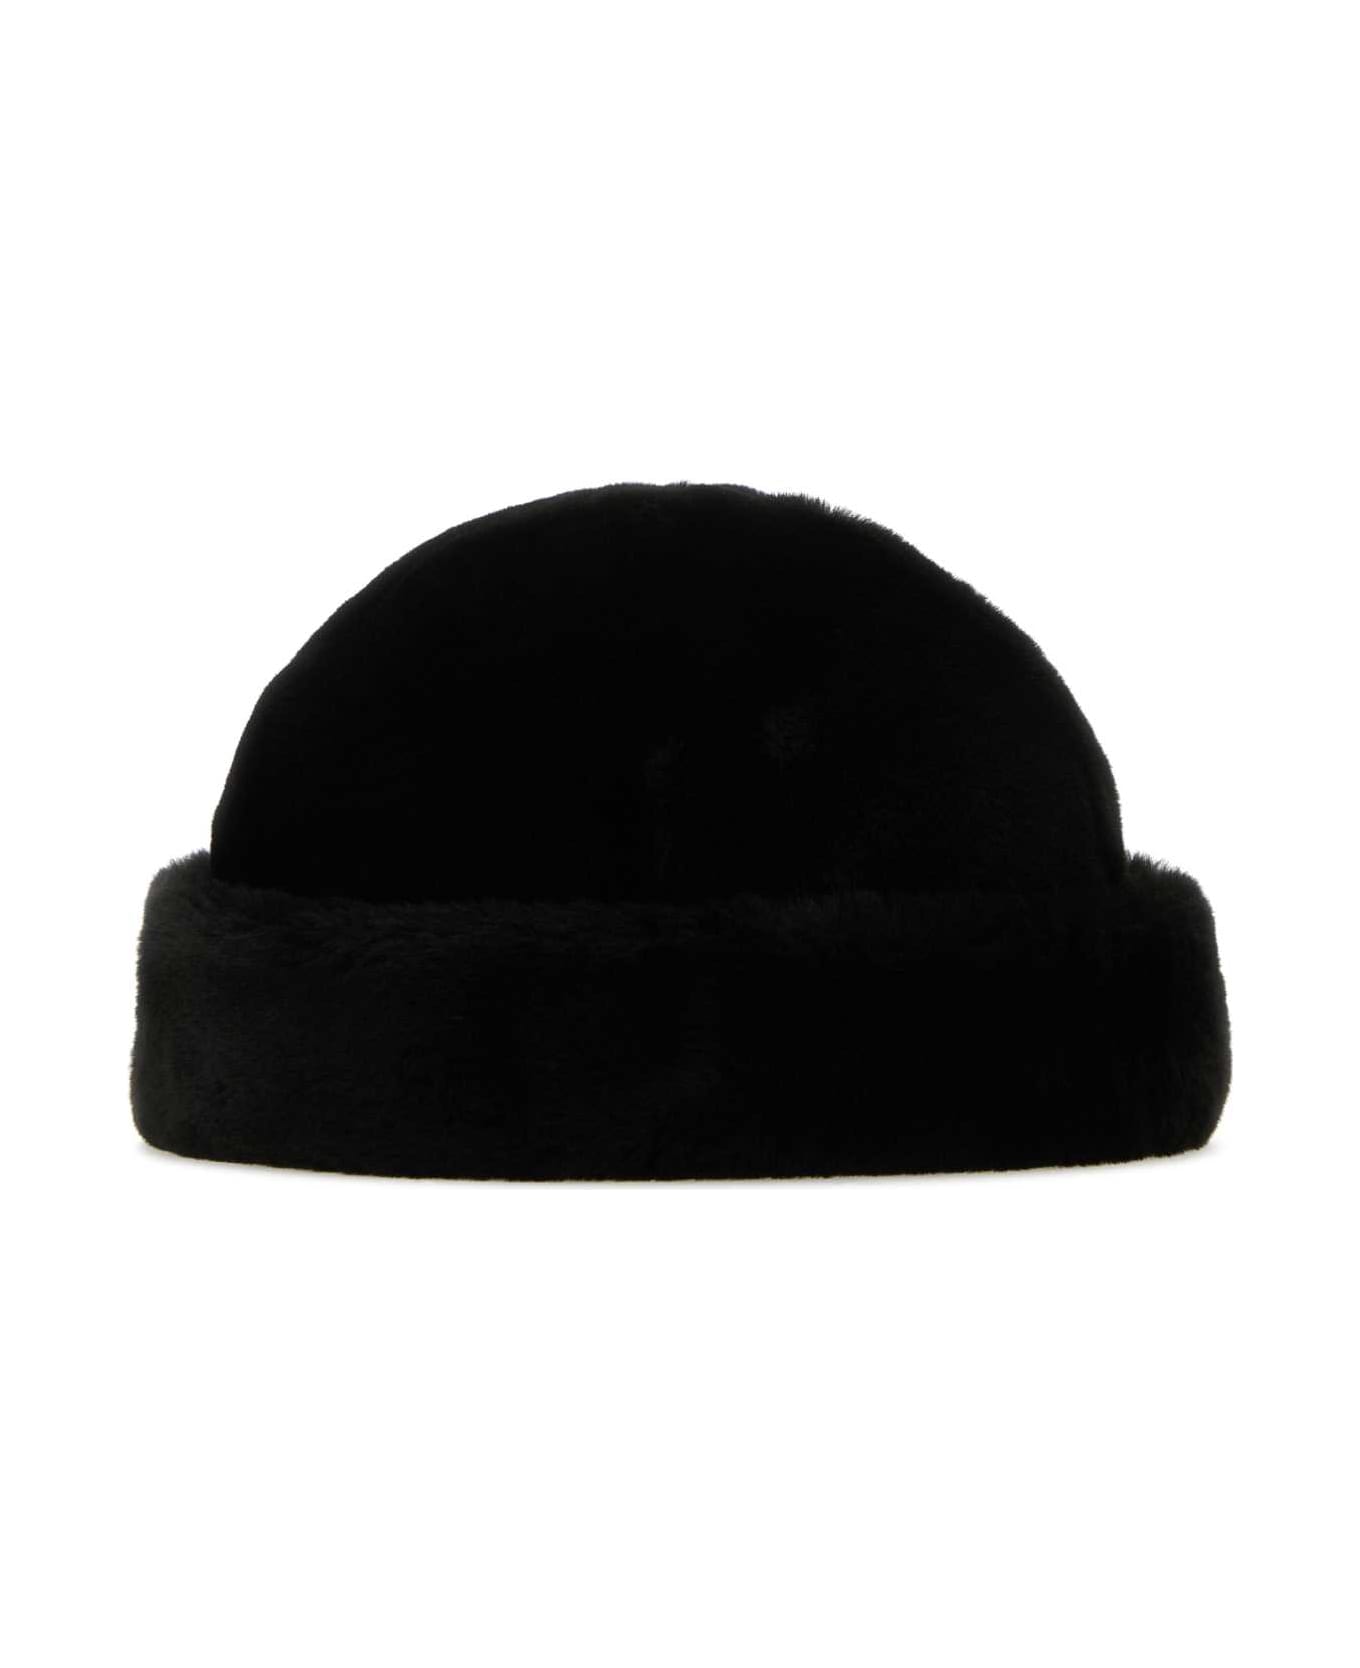 Prada Black Shearling Padded Hat - NERO 帽子